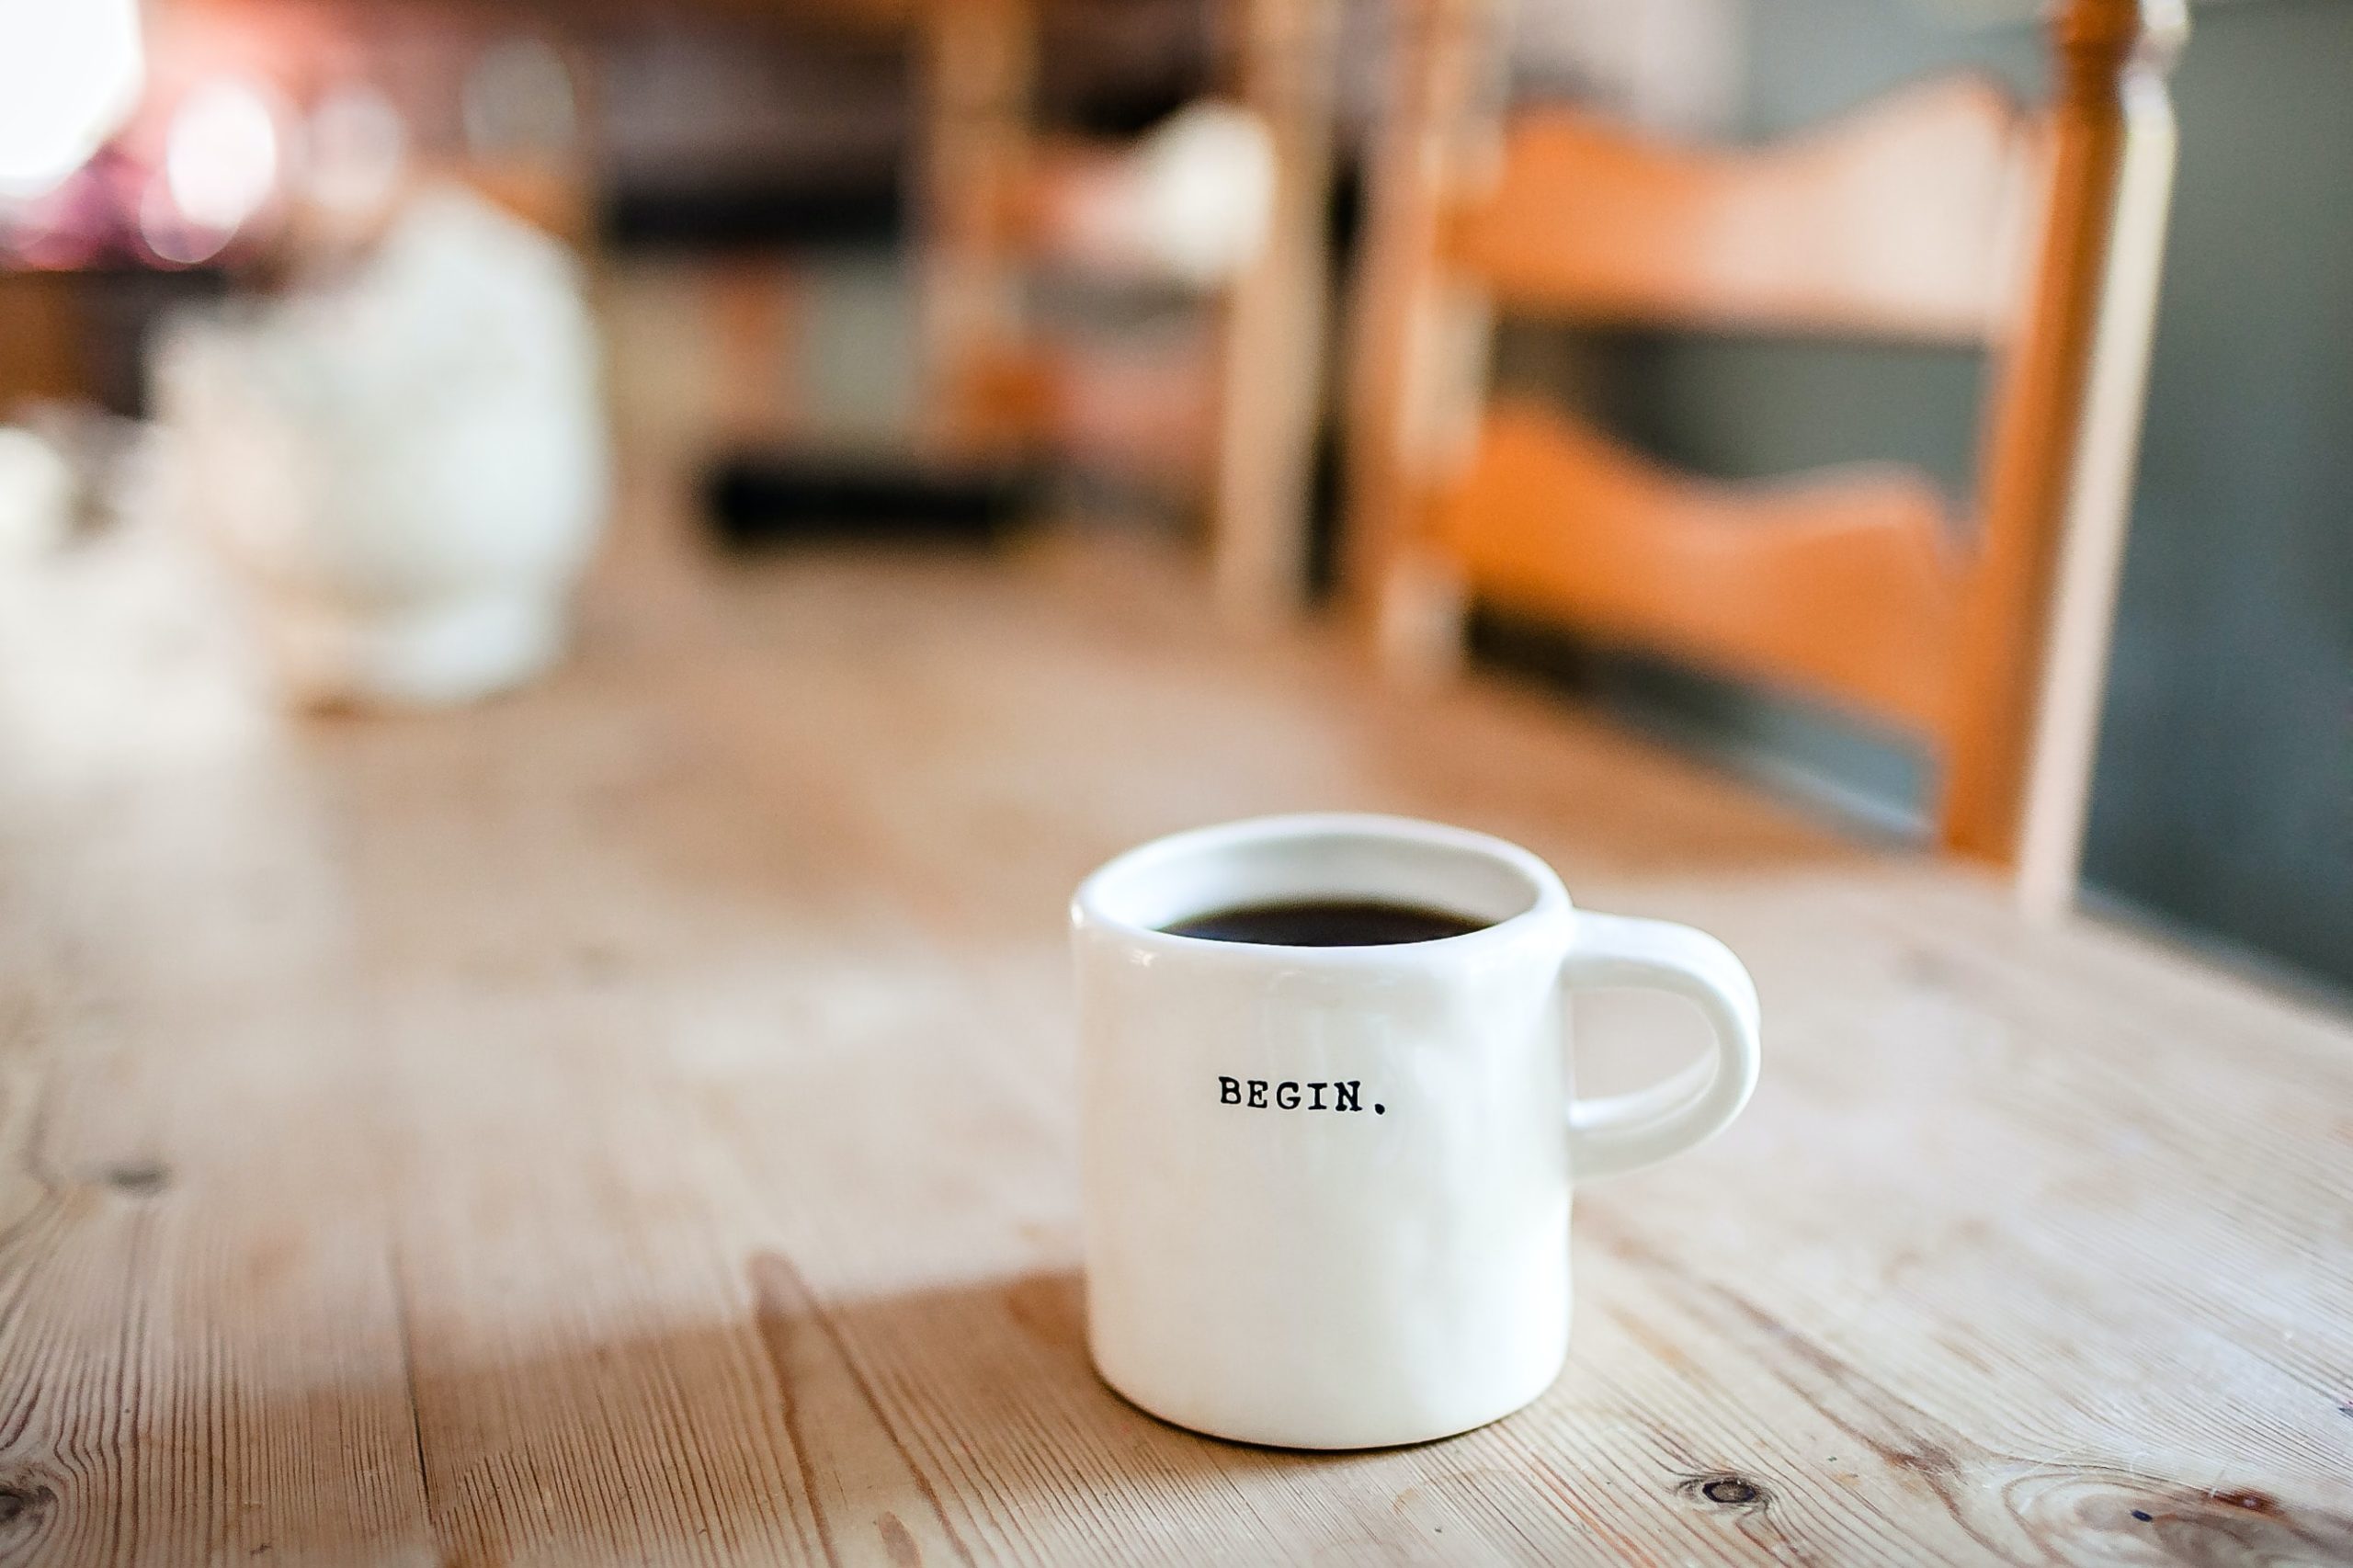 lone coffee mug on table inscribed "BEGIN"